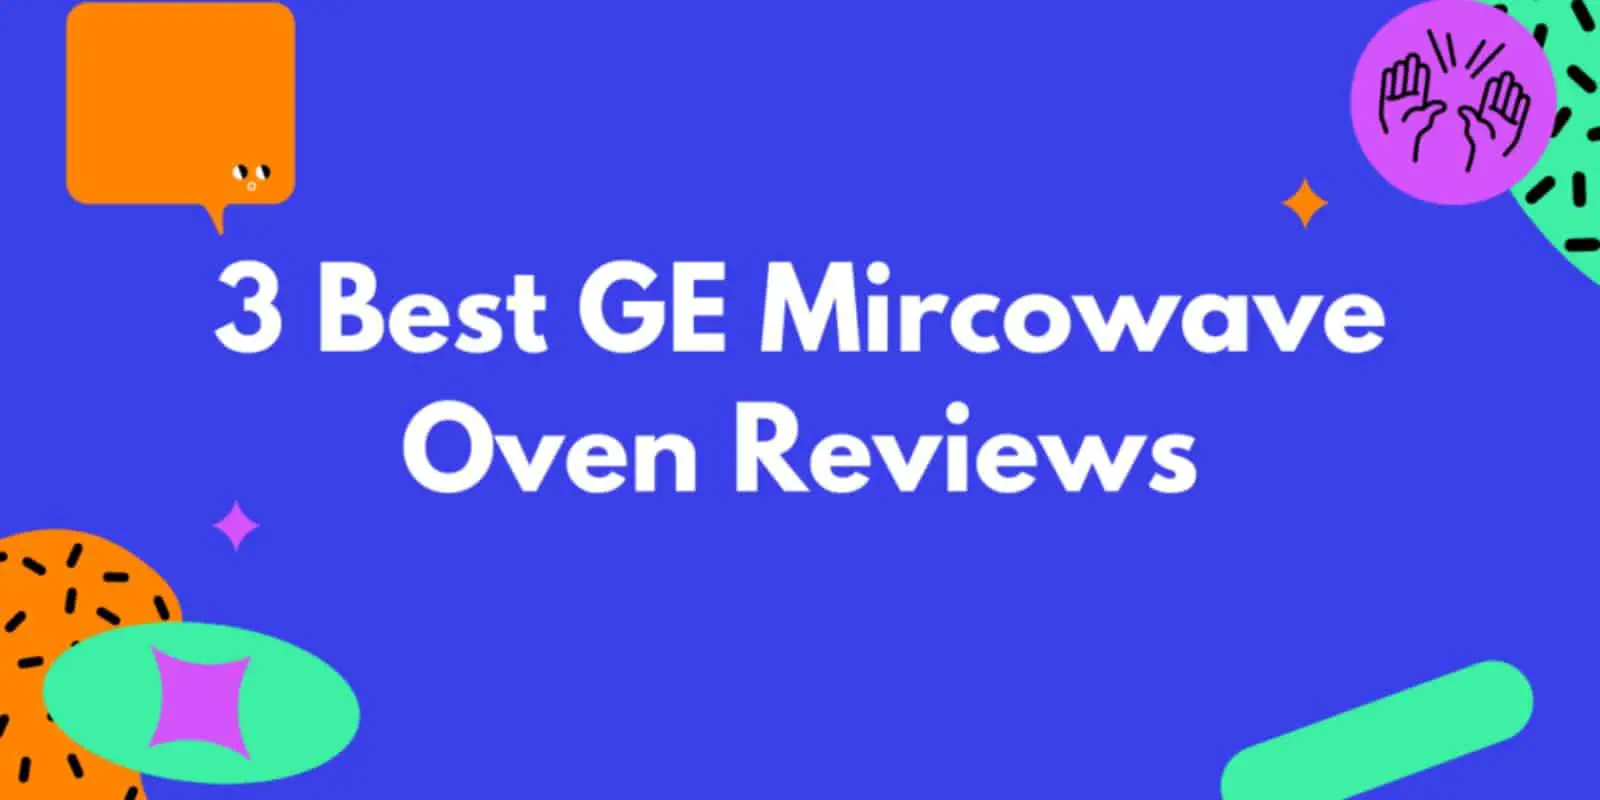 3 Best GE Microwave Ovens To Buy – 2021